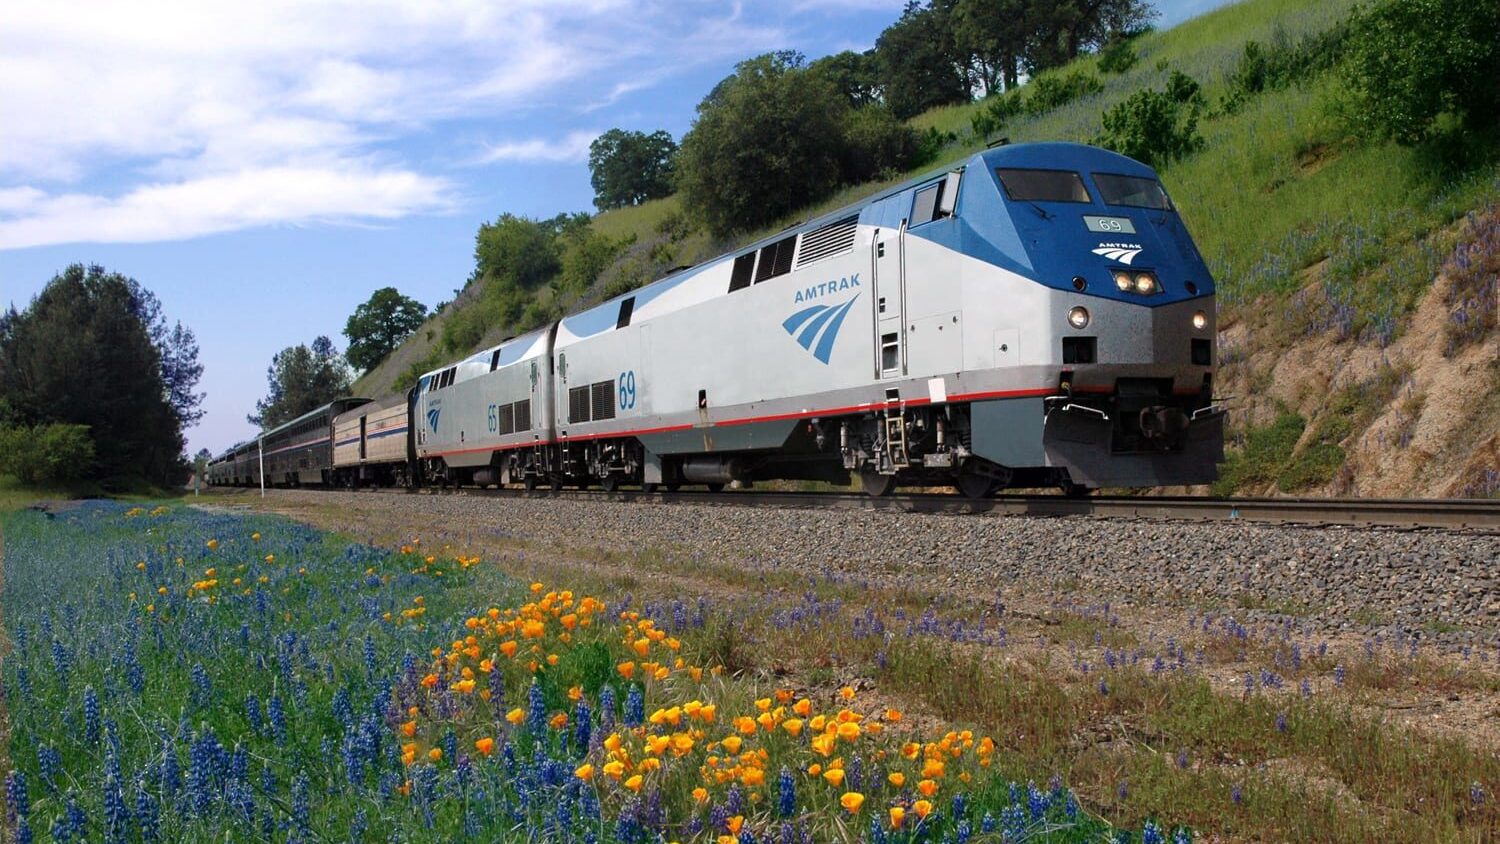 Amtrak's California Zephyr scenic train route